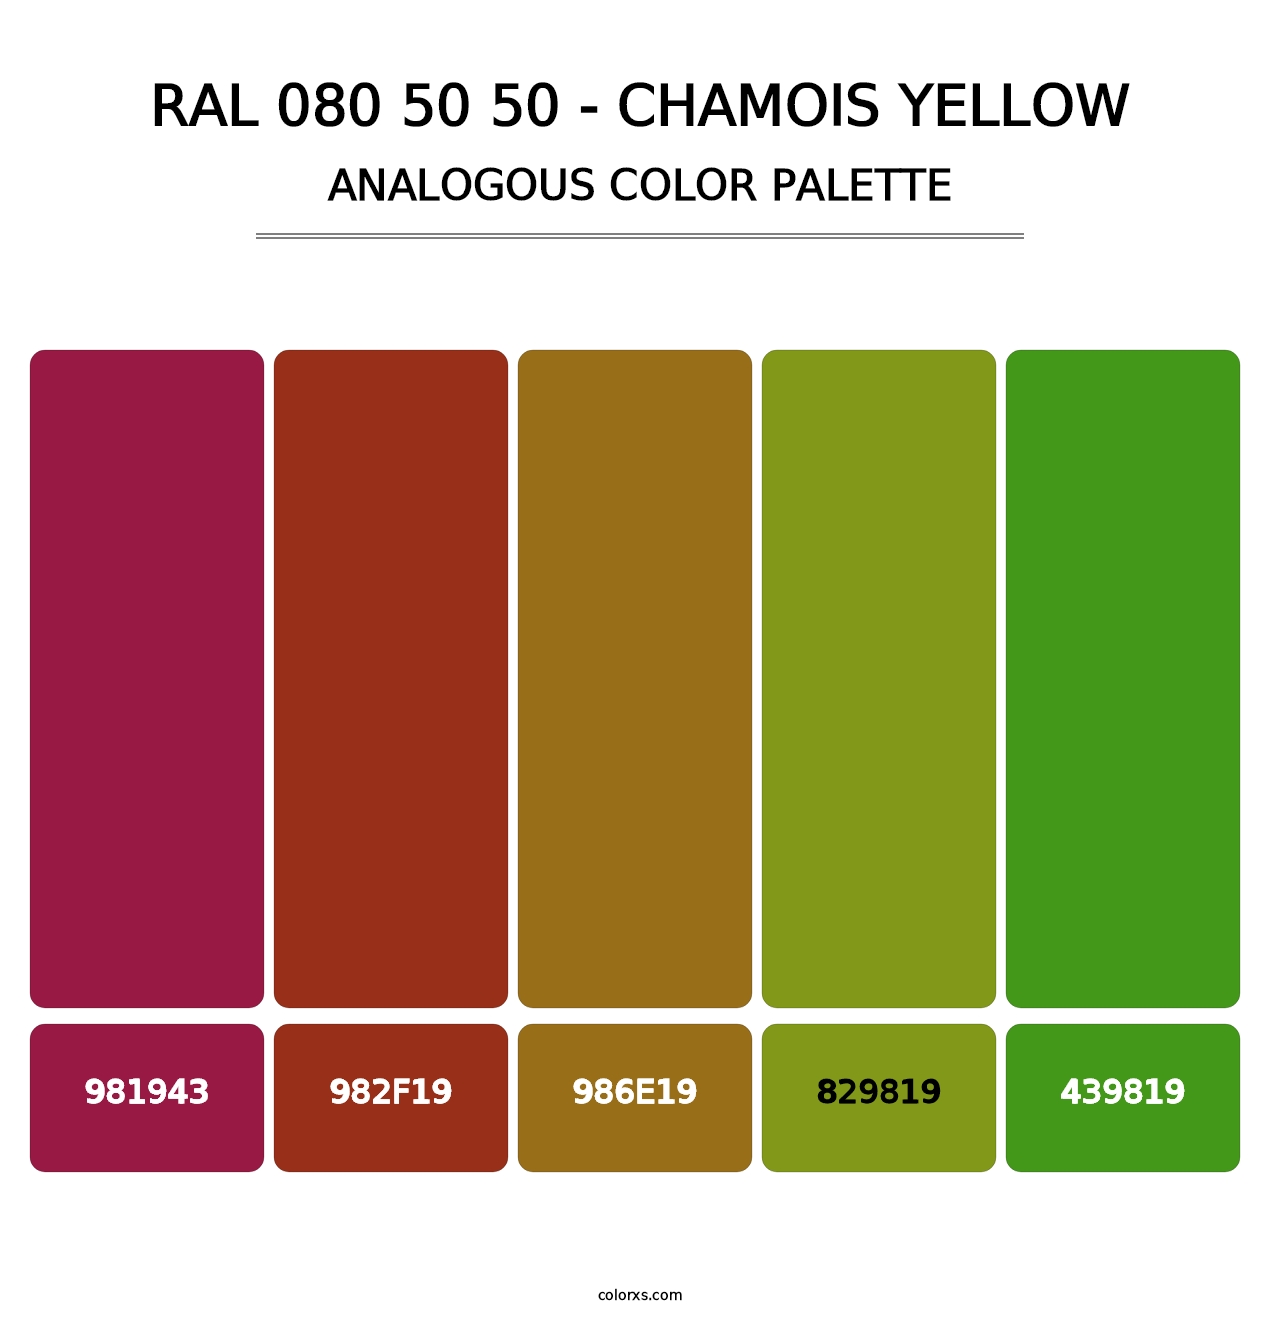 RAL 080 50 50 - Chamois Yellow - Analogous Color Palette